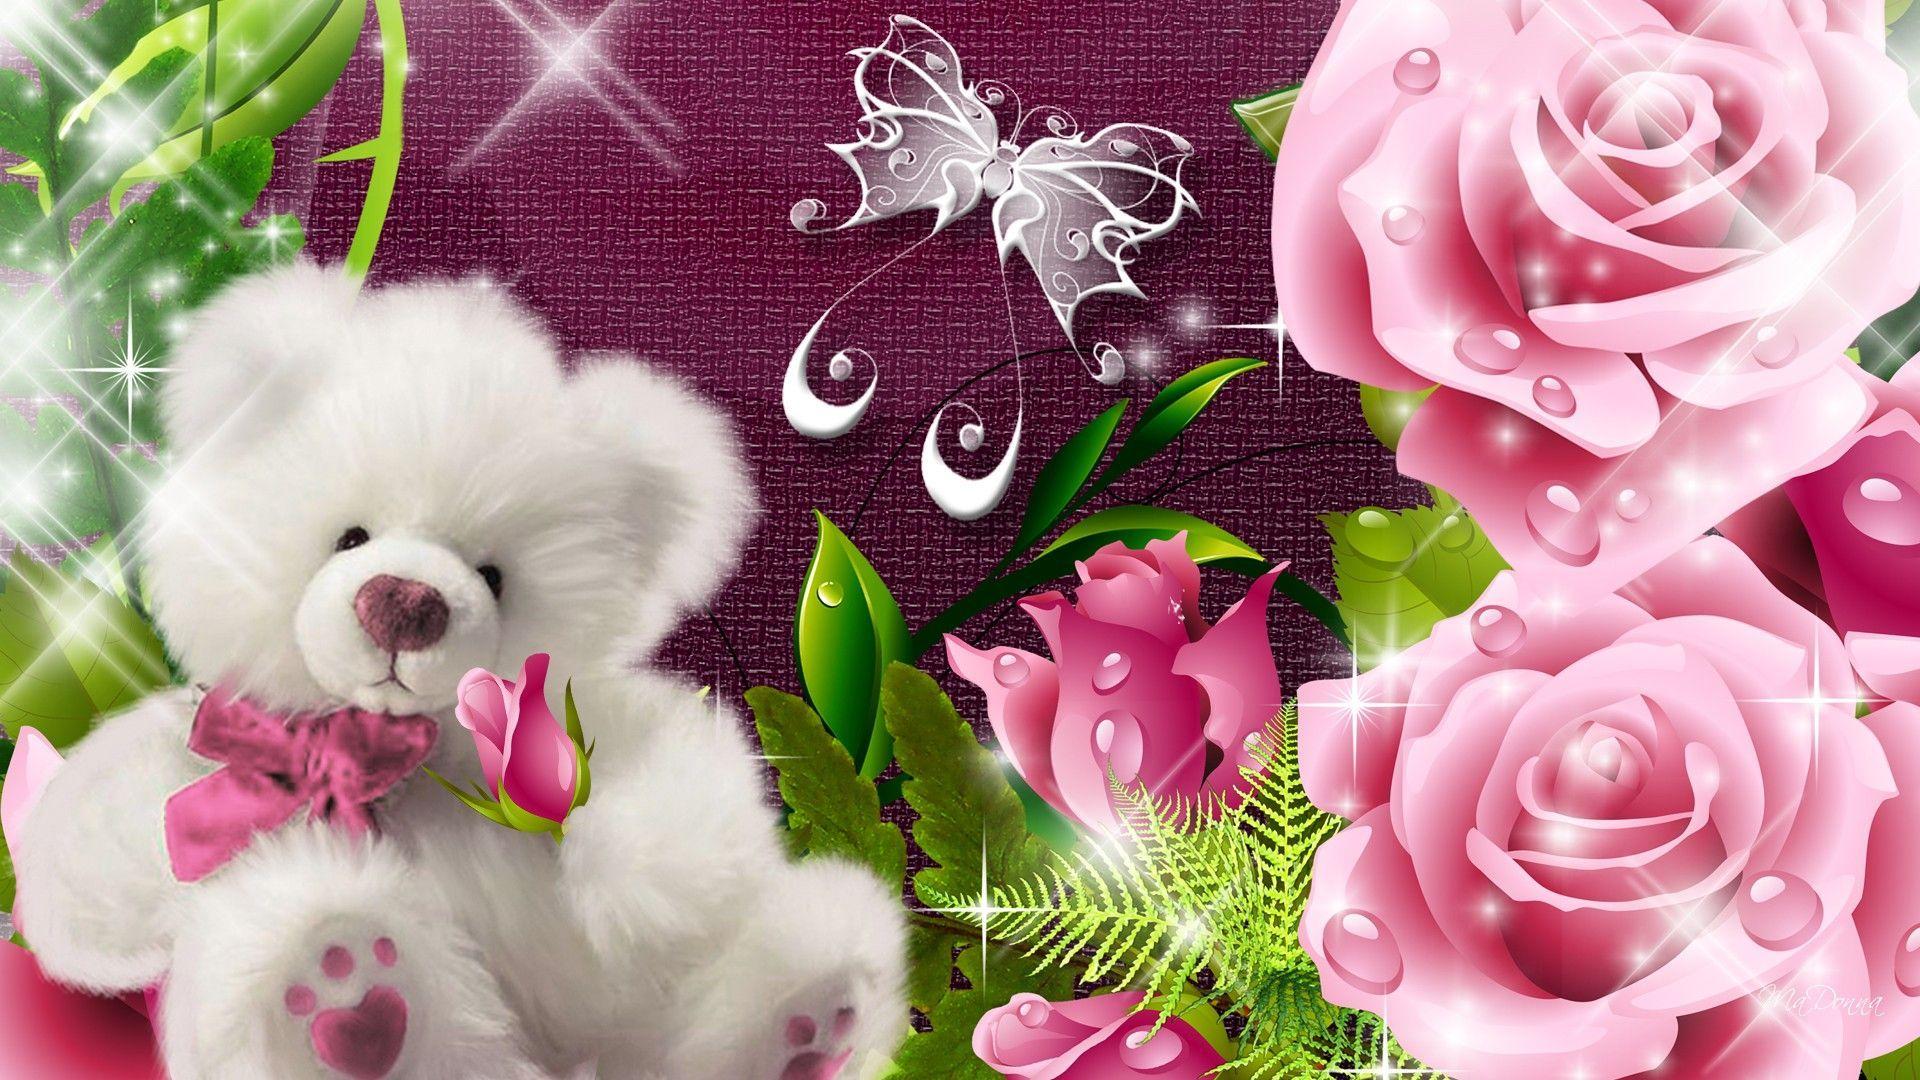 Pink Roses Wallpaper Free Download